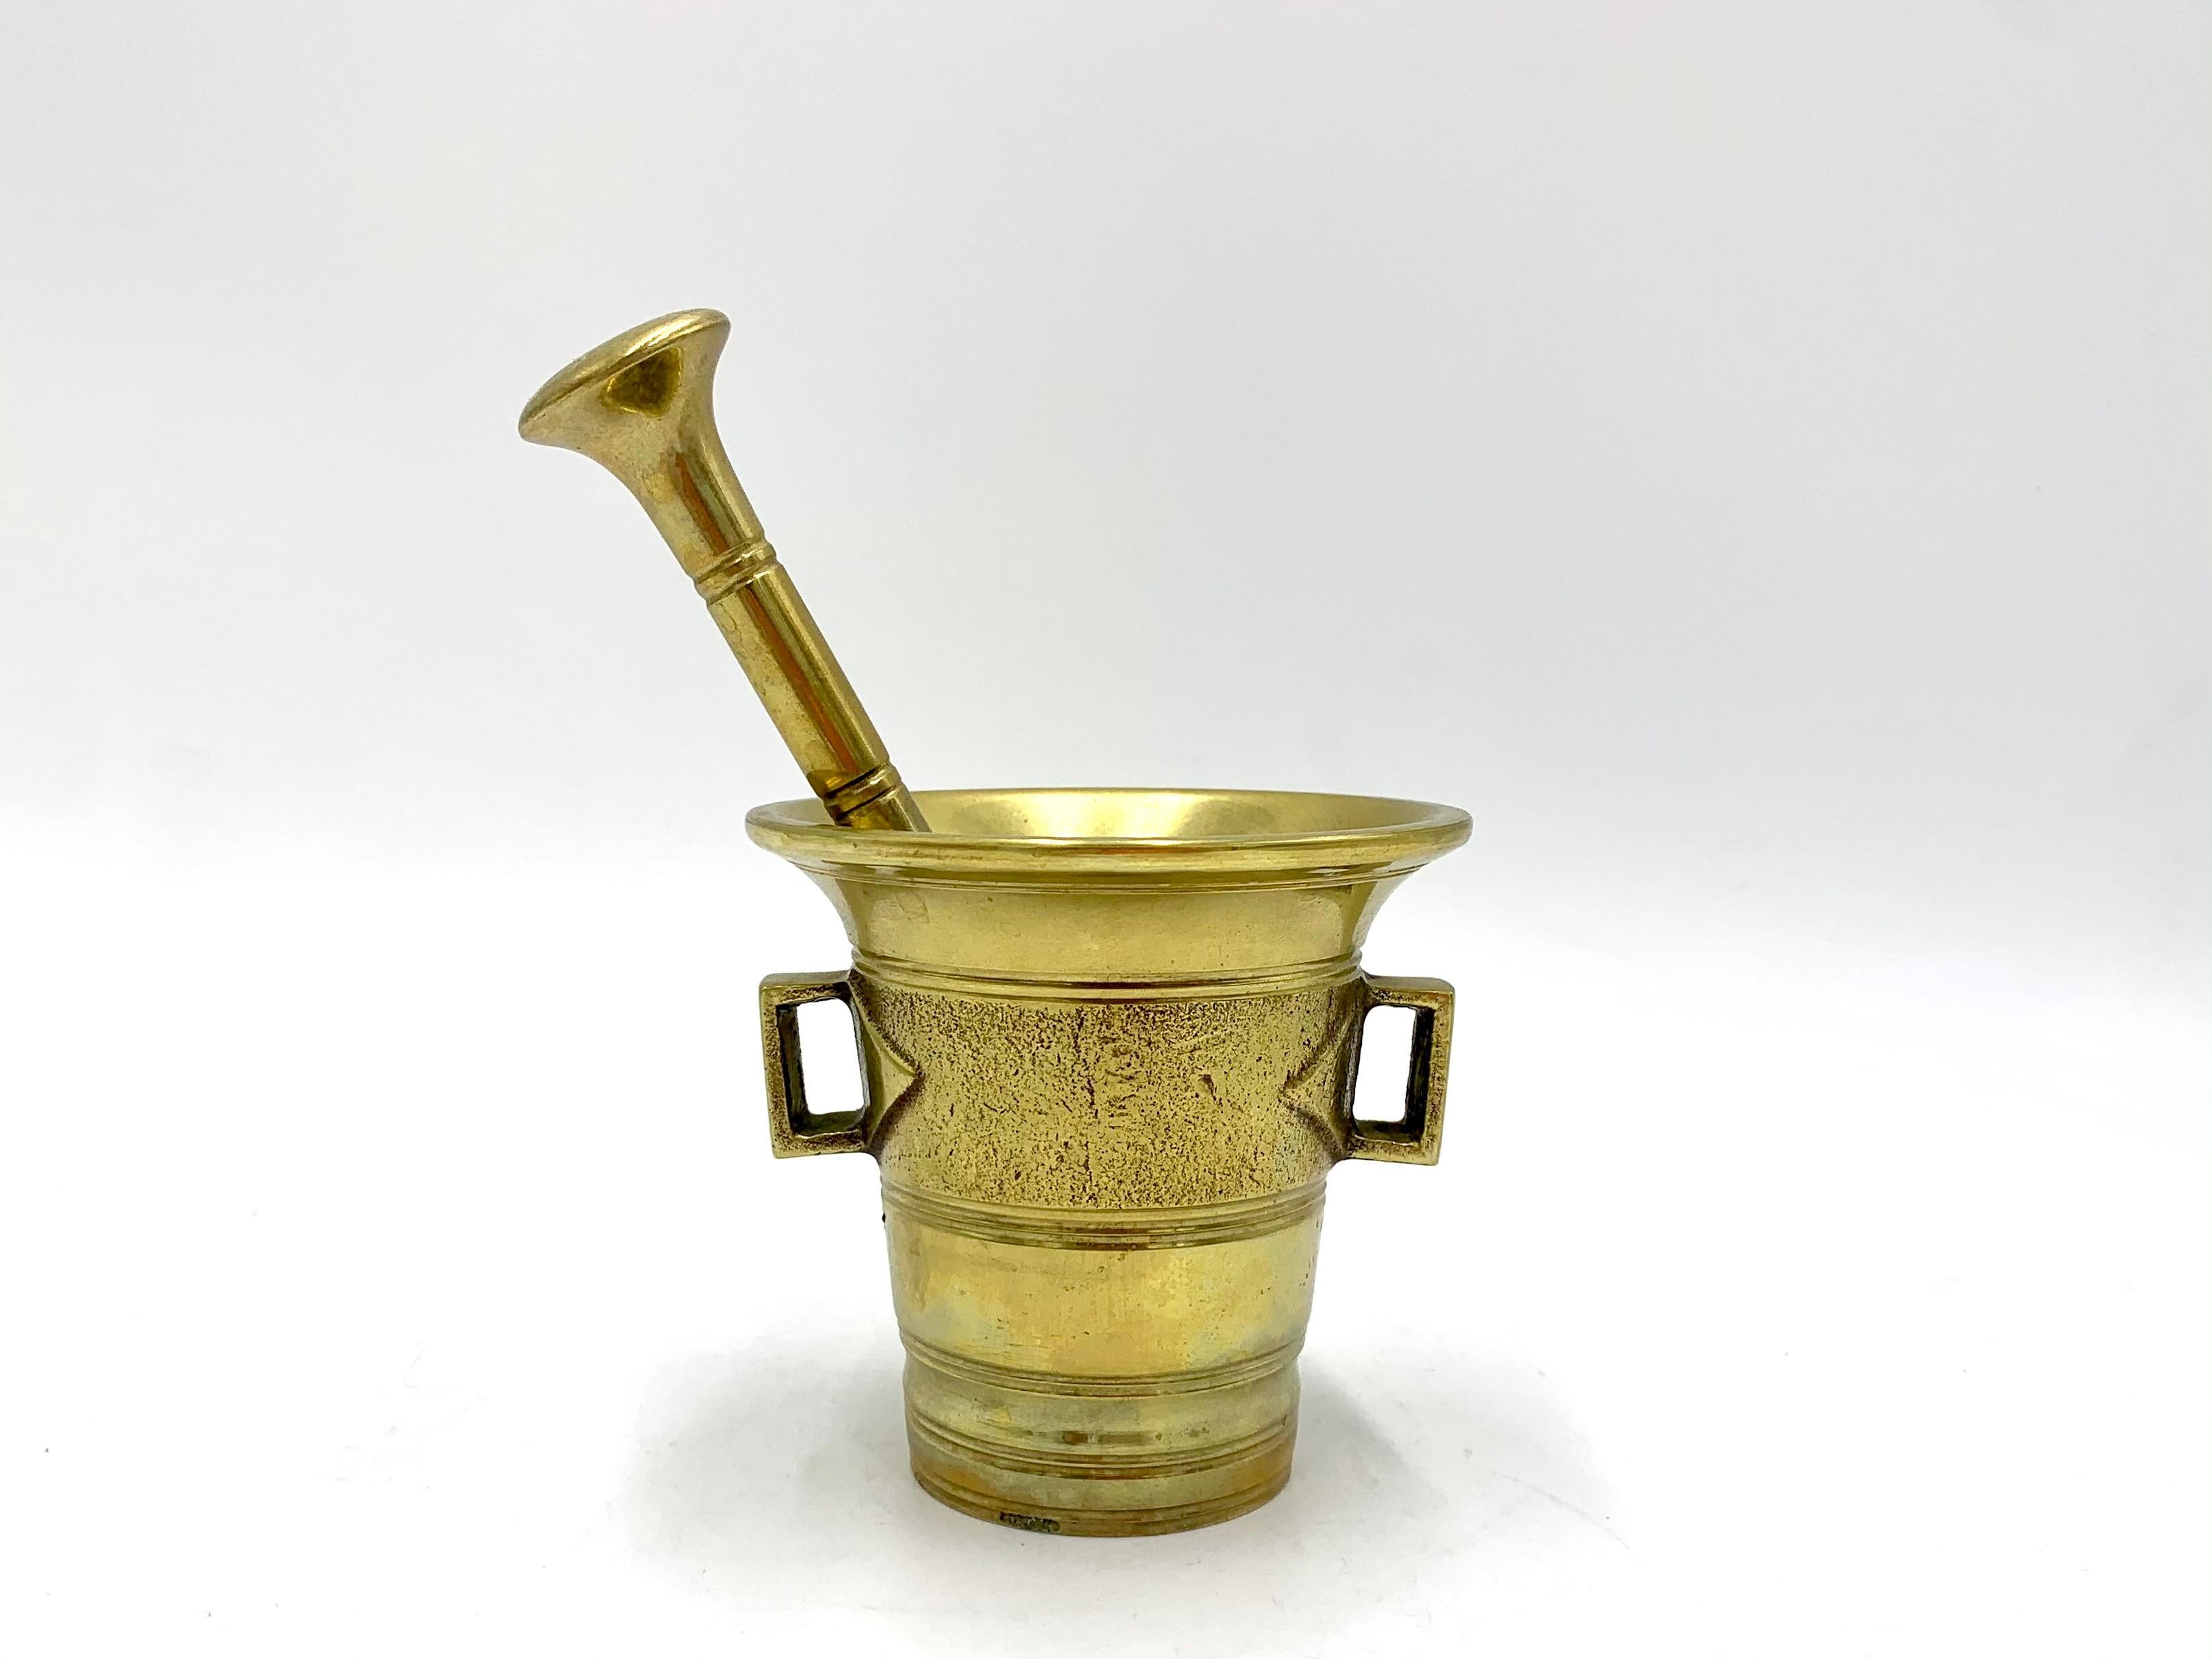 Brass mortar and pestle

Measures: height 9.5 cm, diameter 9.5 cm.